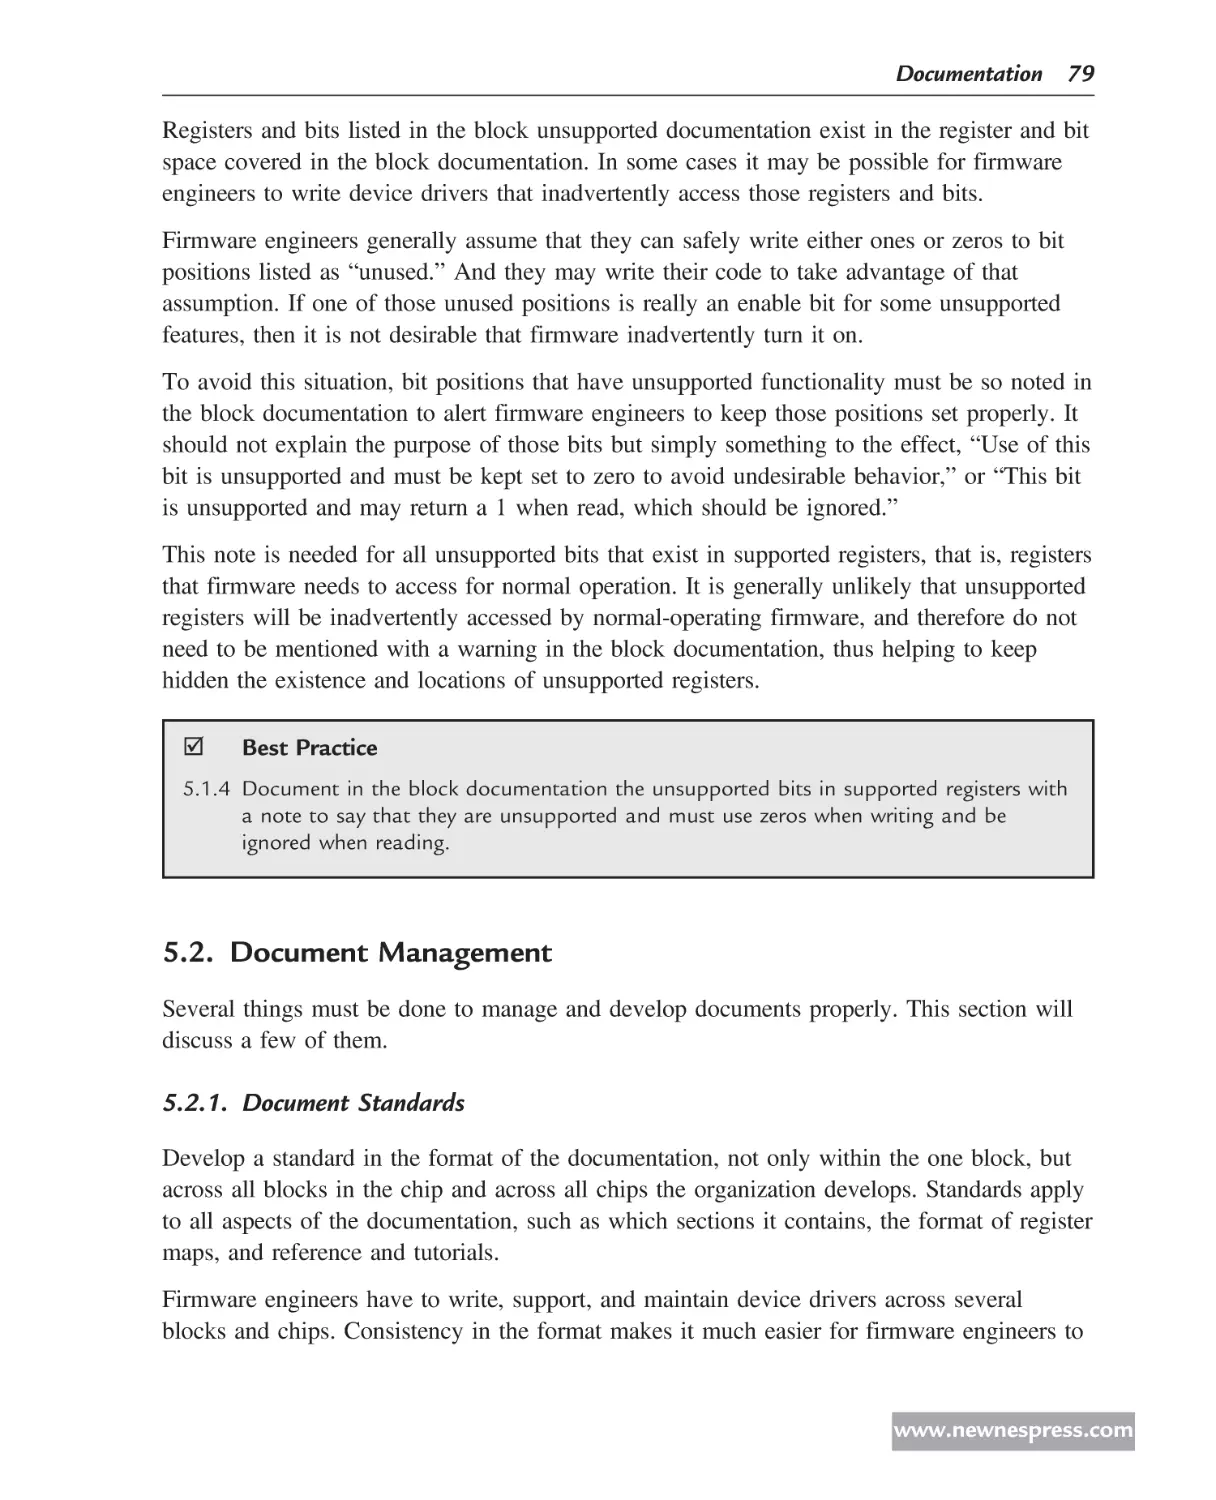 Document Management
Document Standards